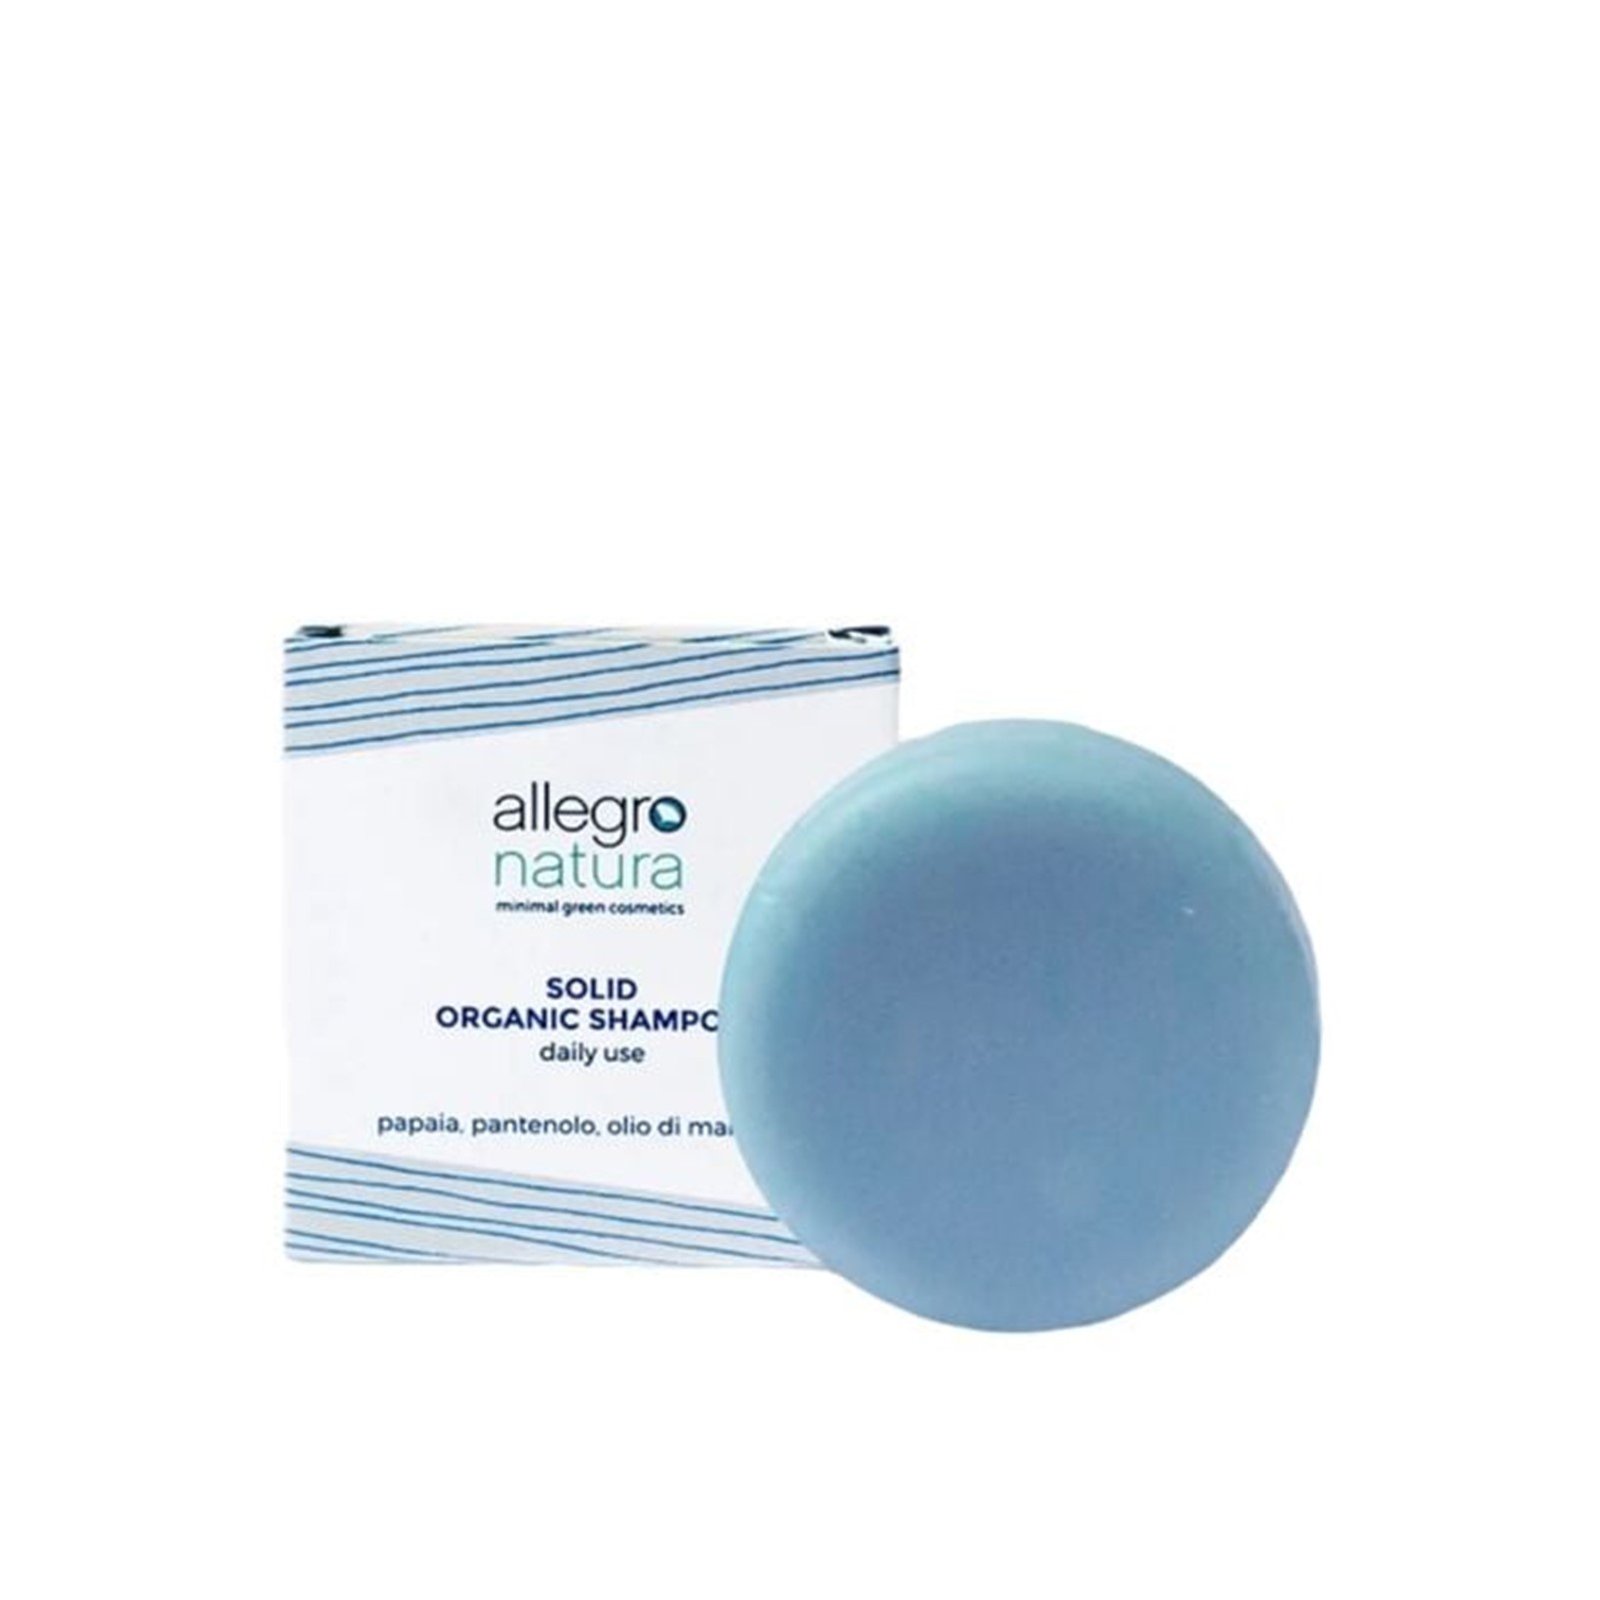 Allegro Natura Solid Organic Shampoo 75g